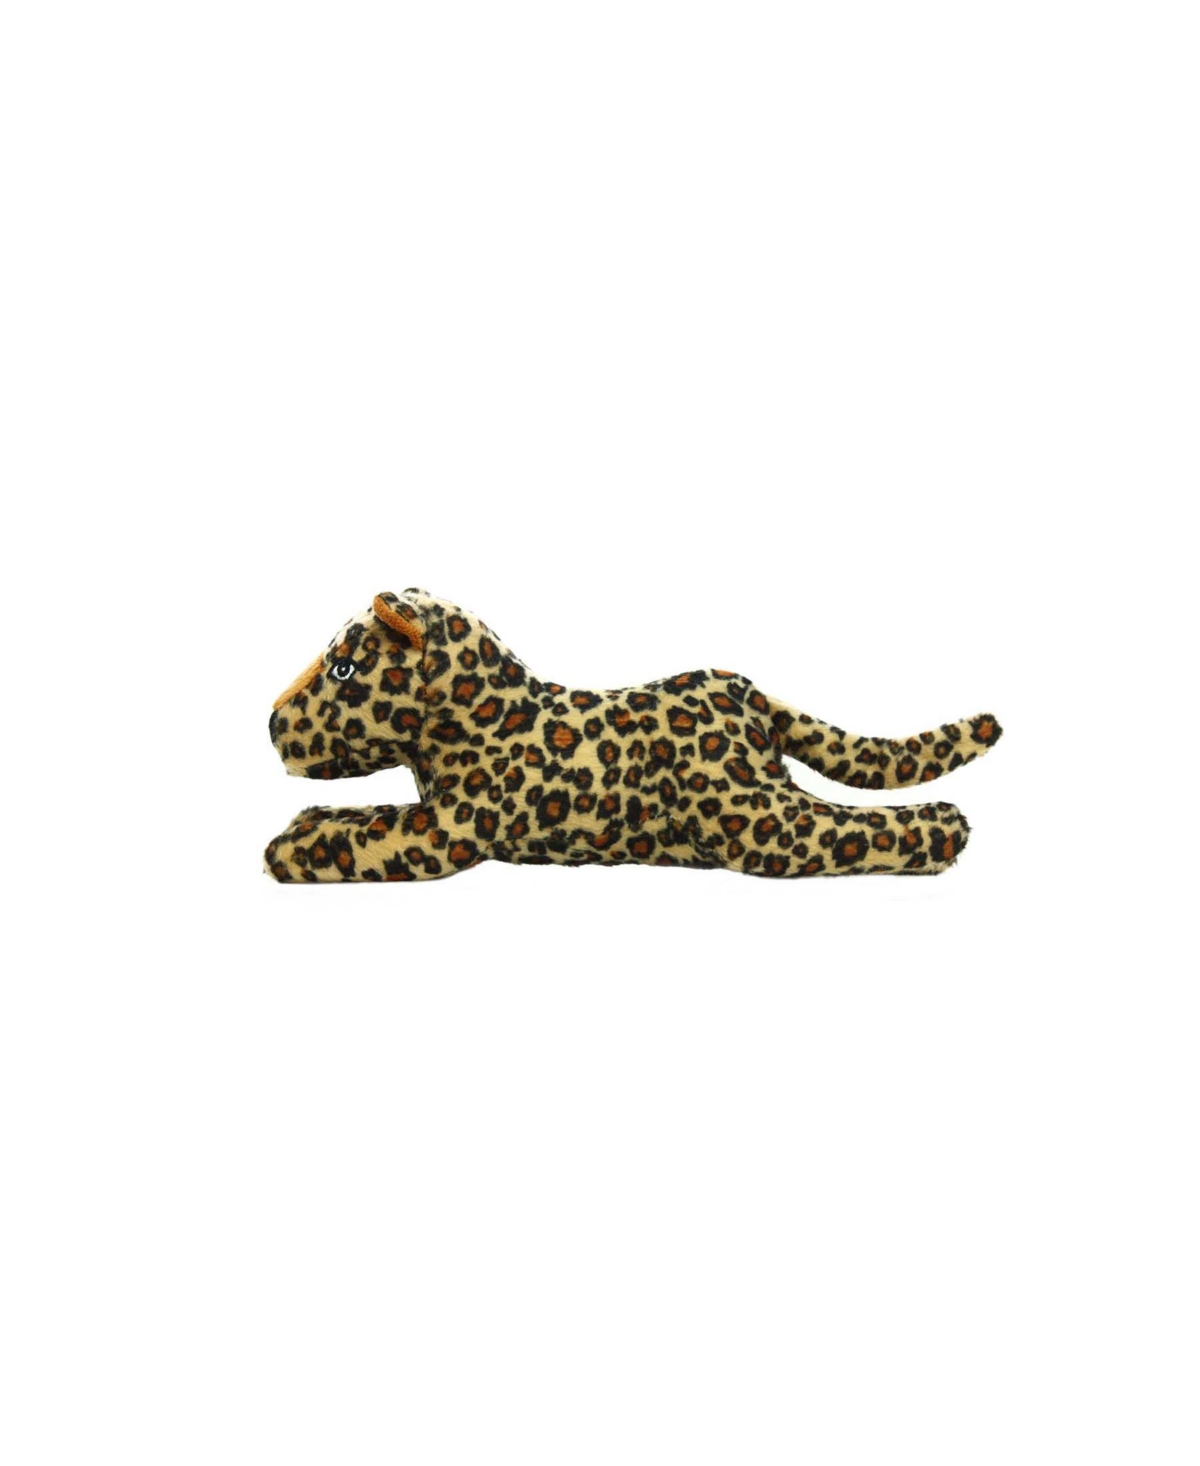 Jr Safari Leopard, Dog Toy - Brown